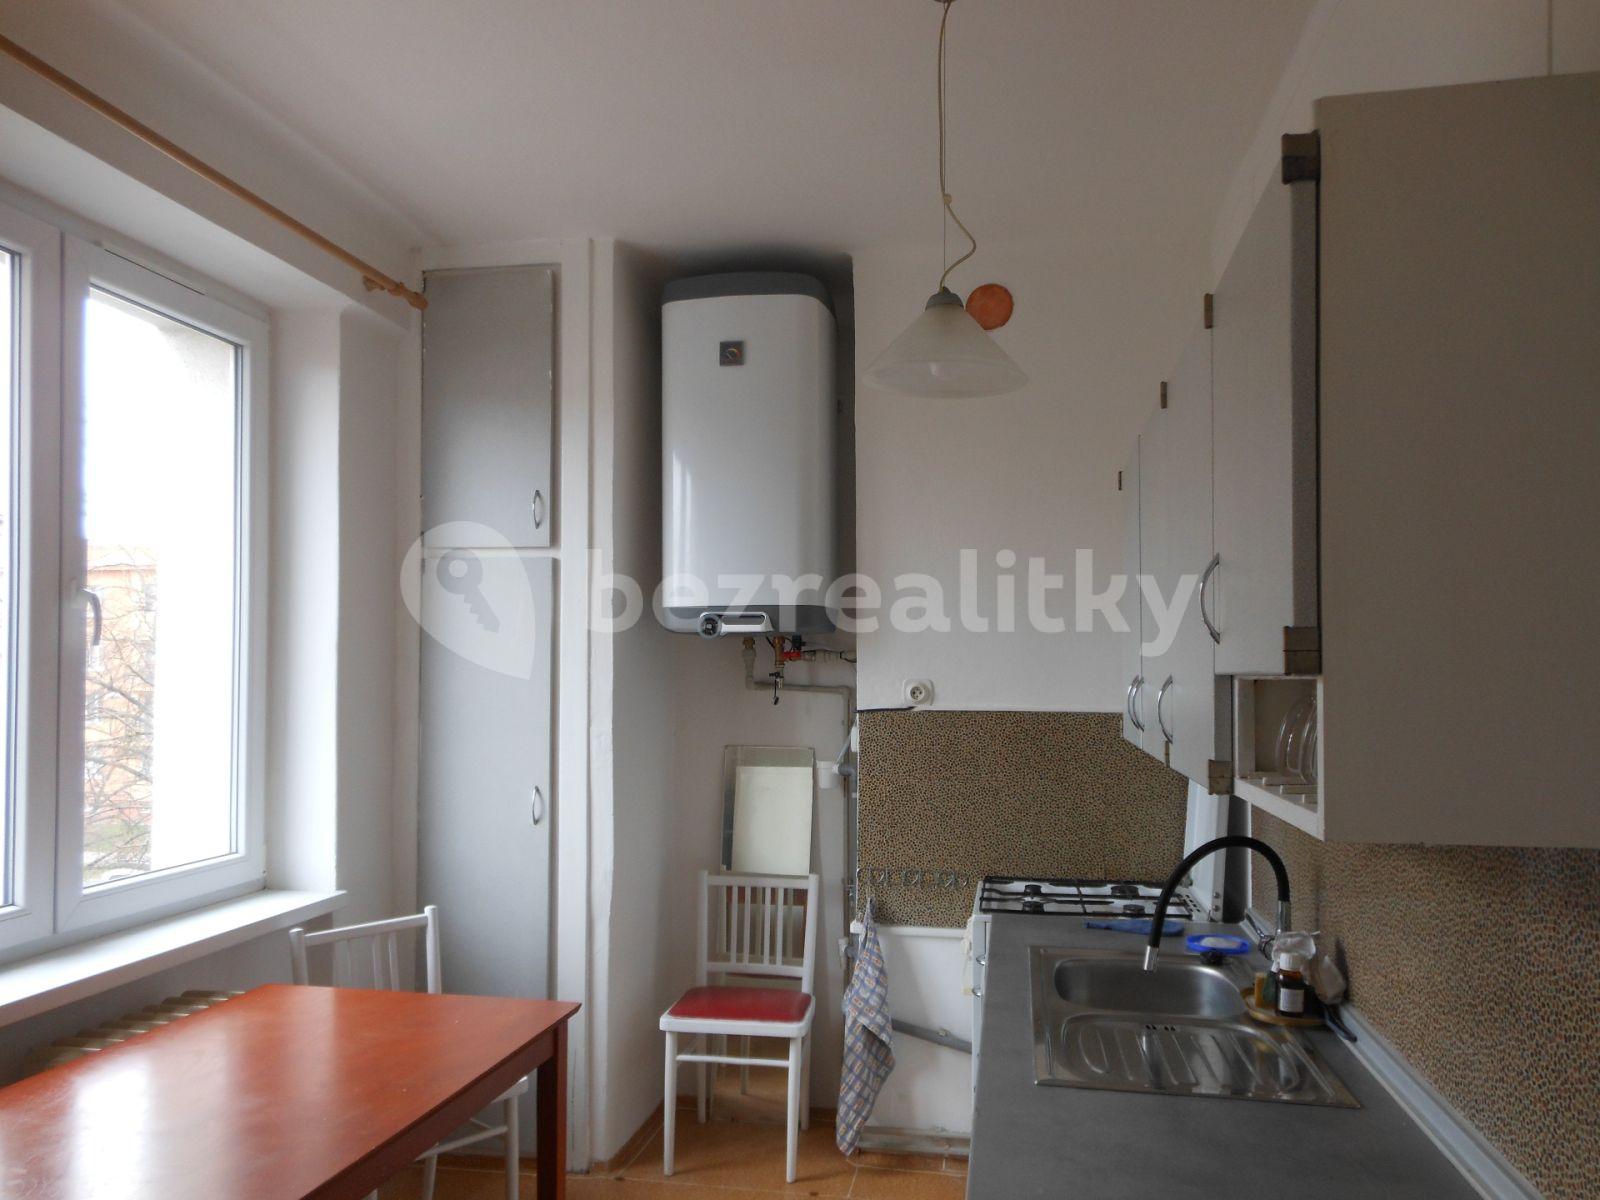 2 bedroom flat to rent, 54 m², Částkova, Plzeň, Plzeňský Region